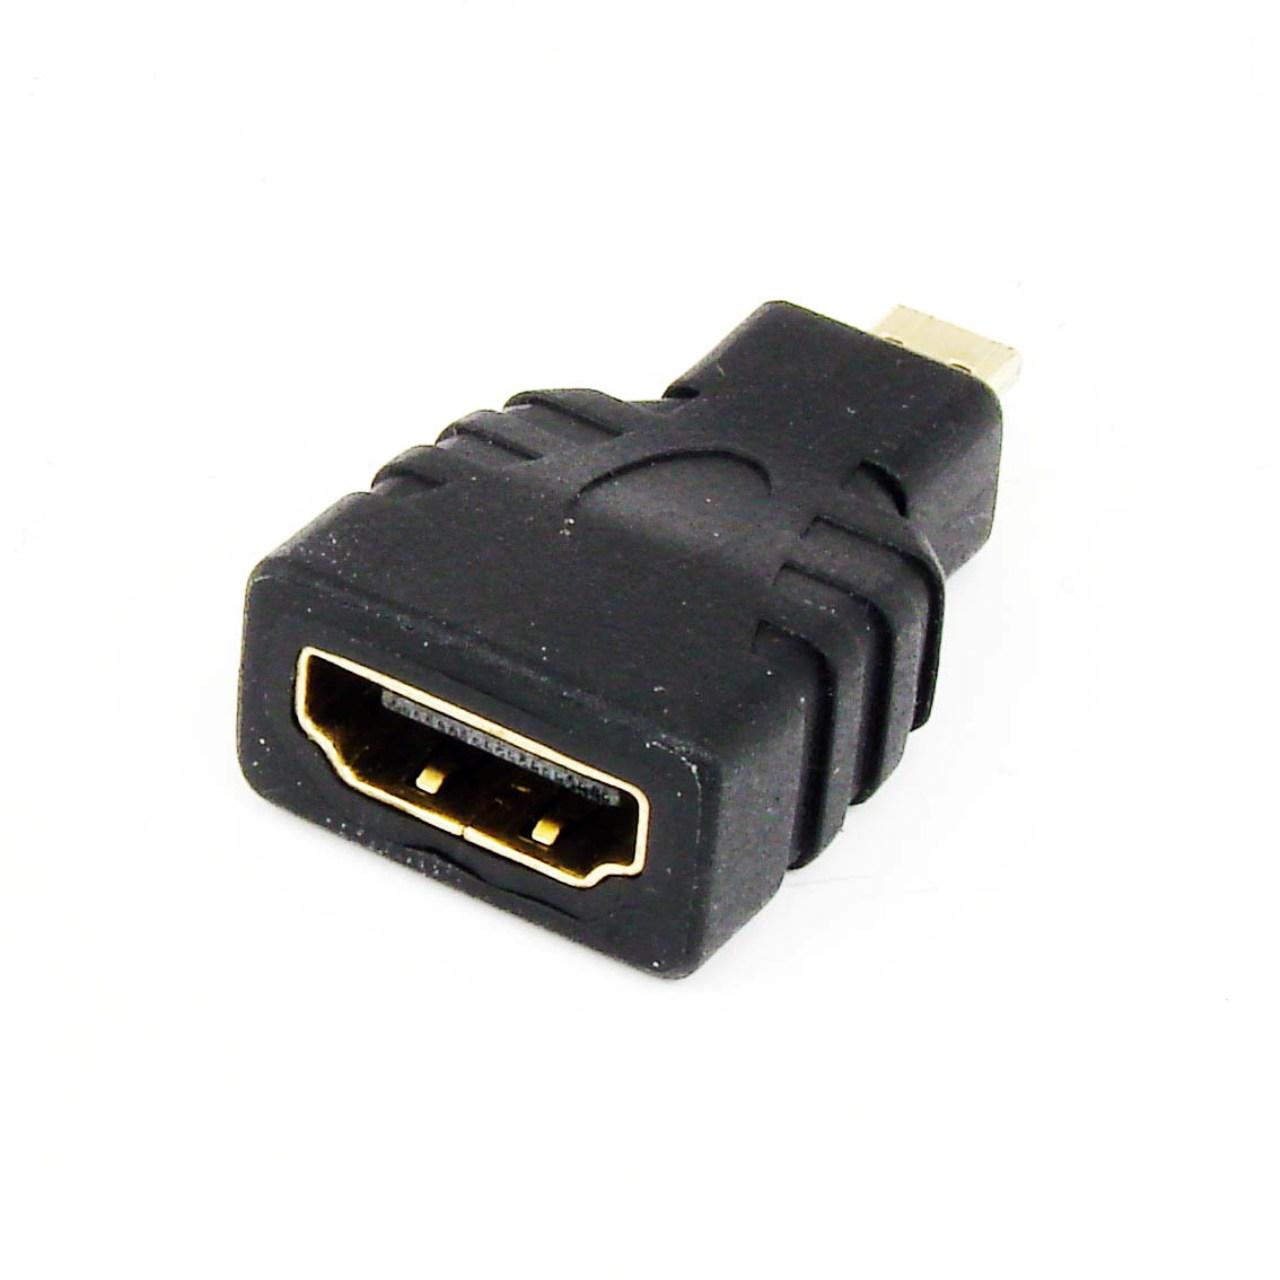  MicroHDMI - HDMI